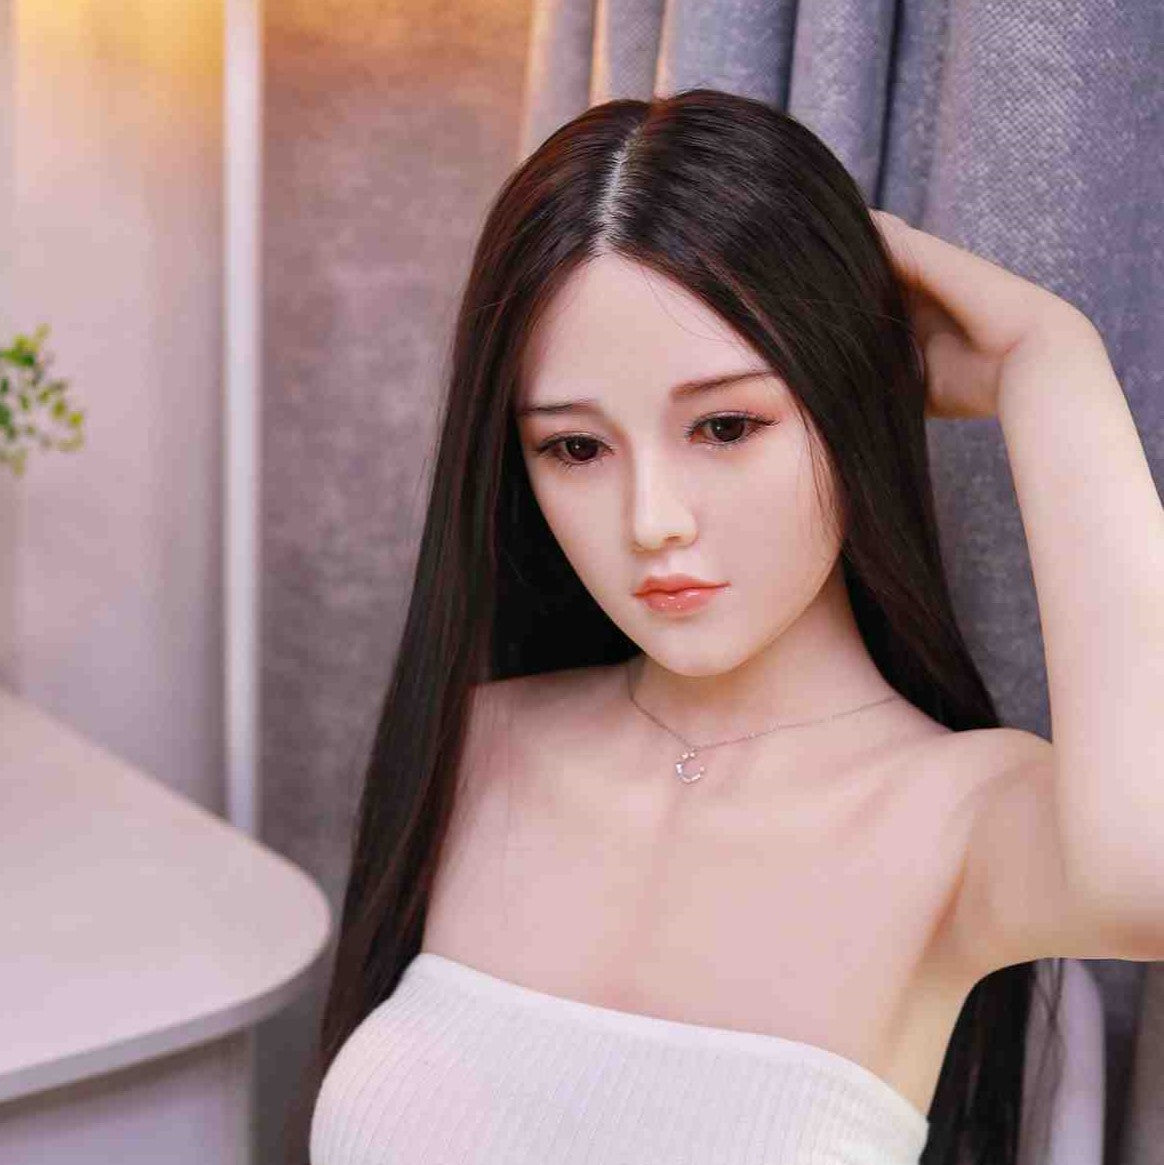 Neodoll Sugar Babe - Kenzie - Silicone Sex Doll Head - Implanted Hair - Silicone Colour